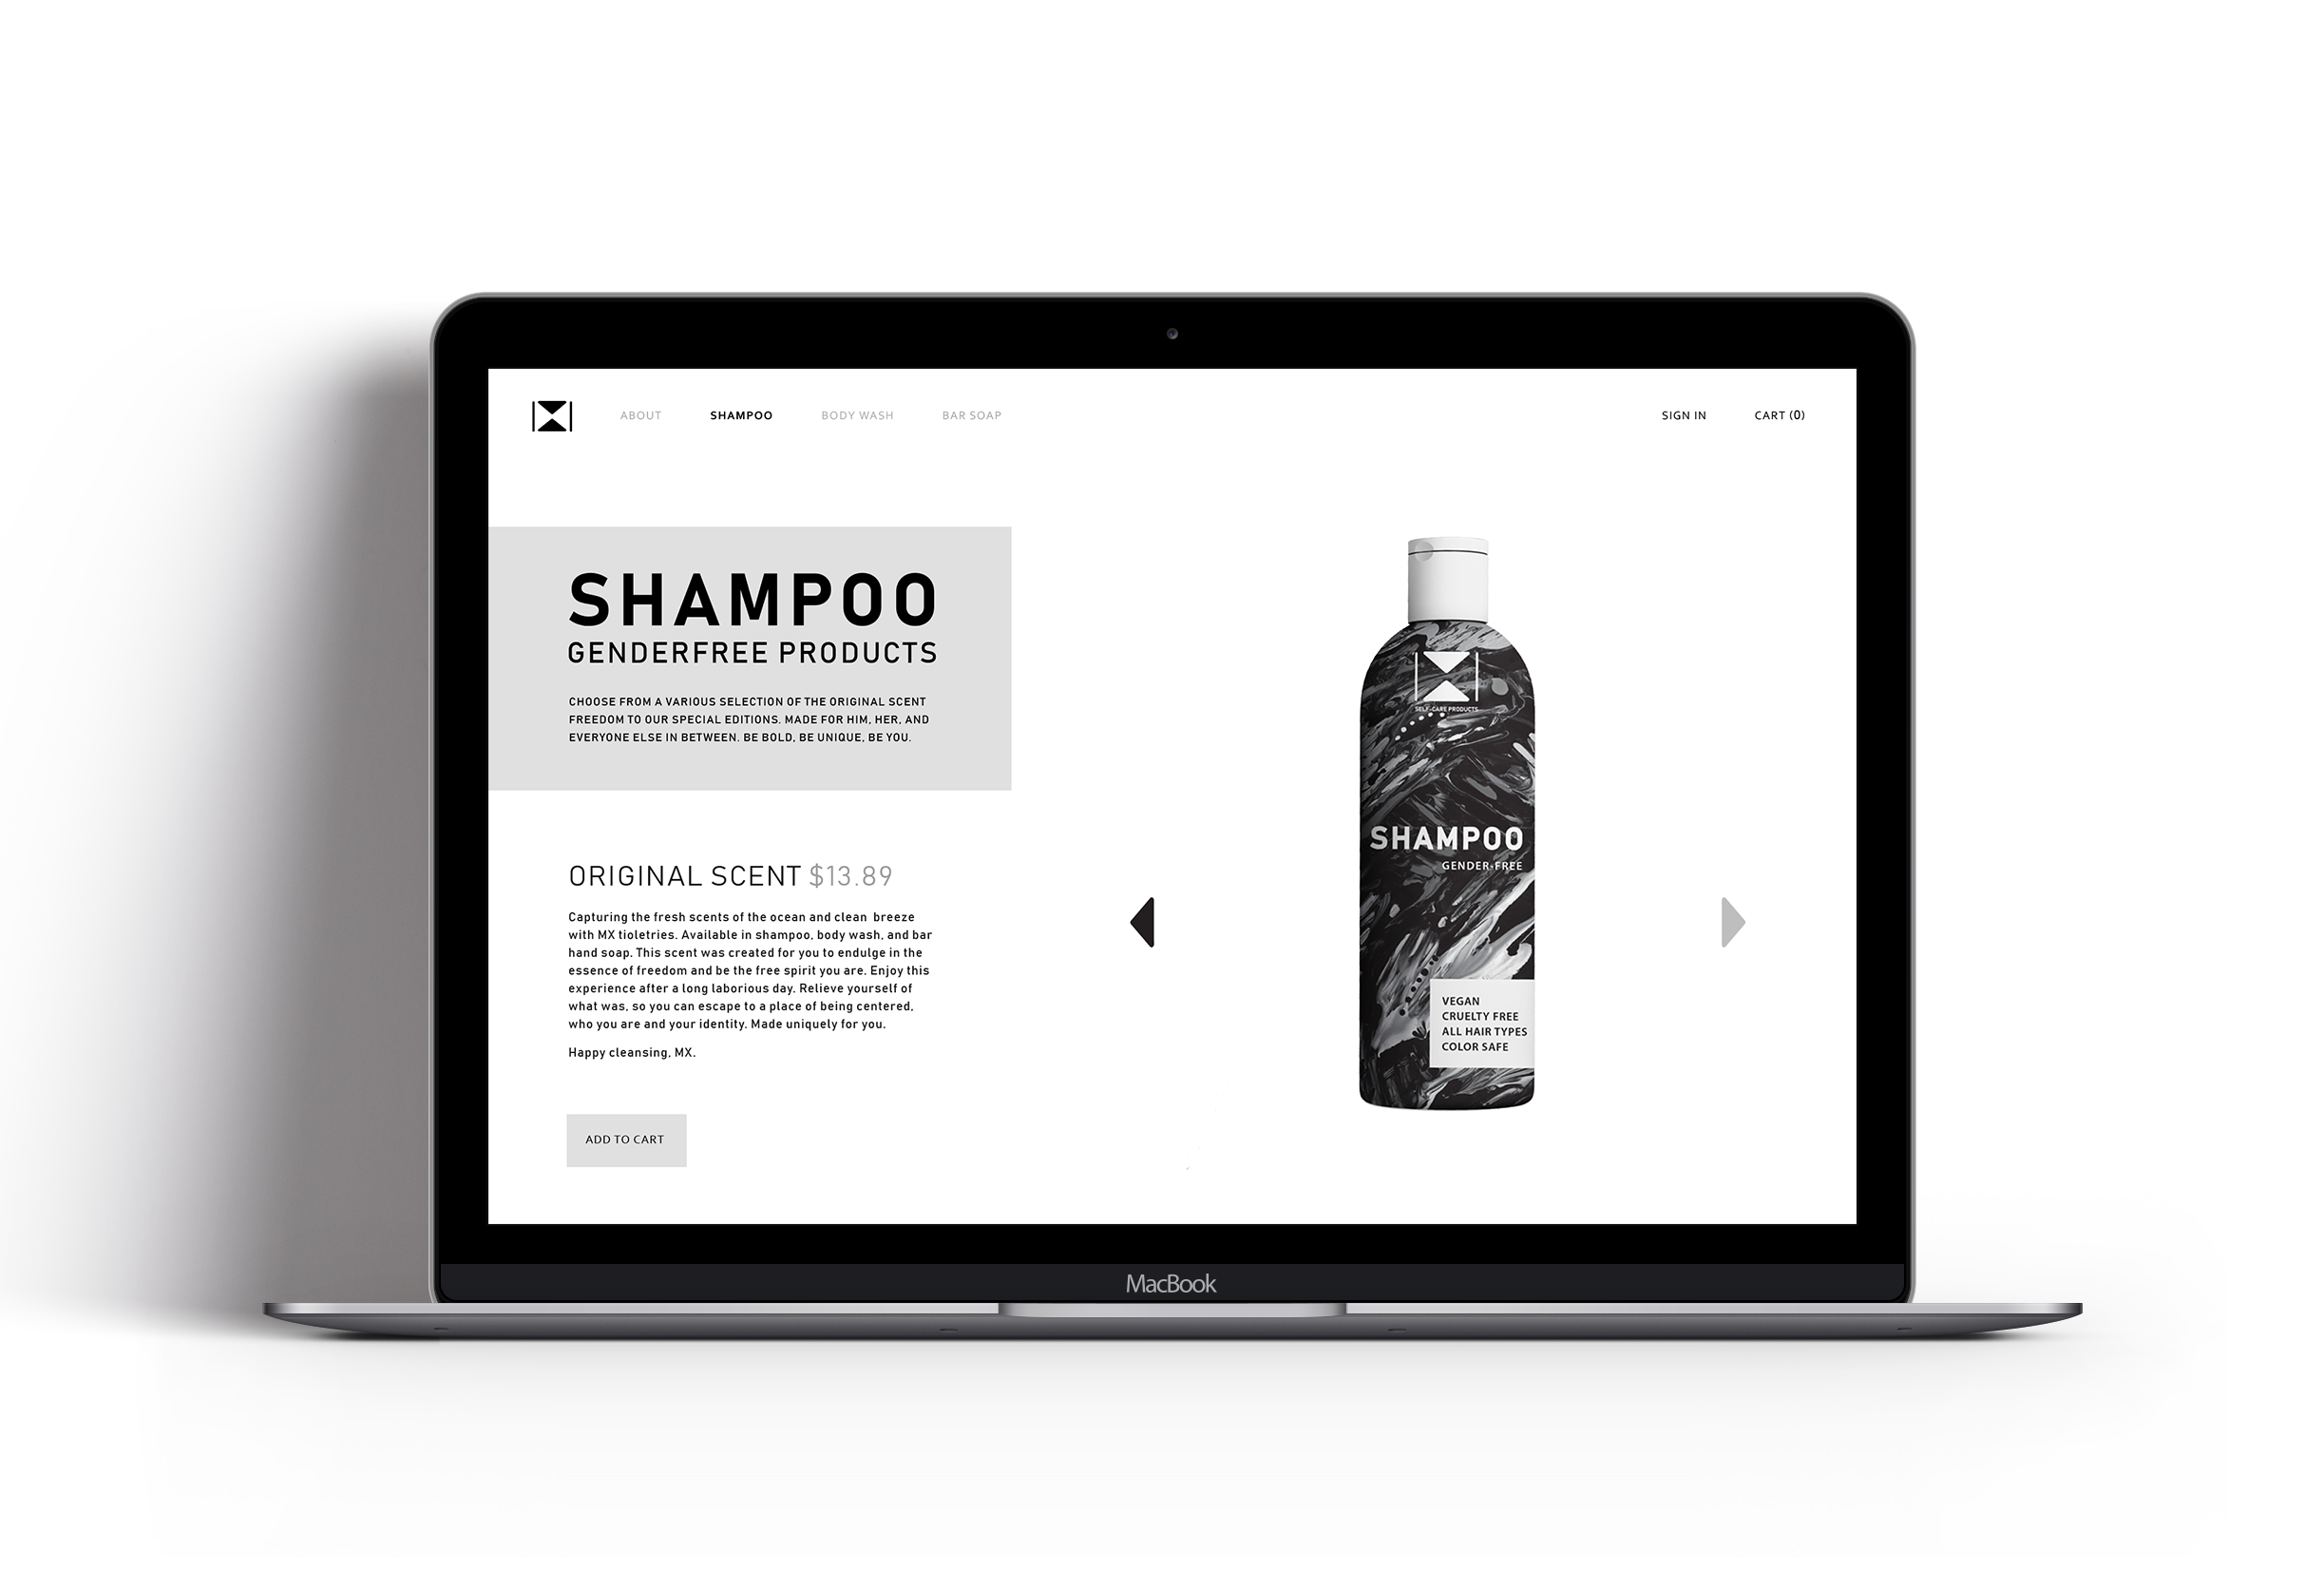 mx_Web-Showcase-Project-Presentation_may 2019 edit shampoo t